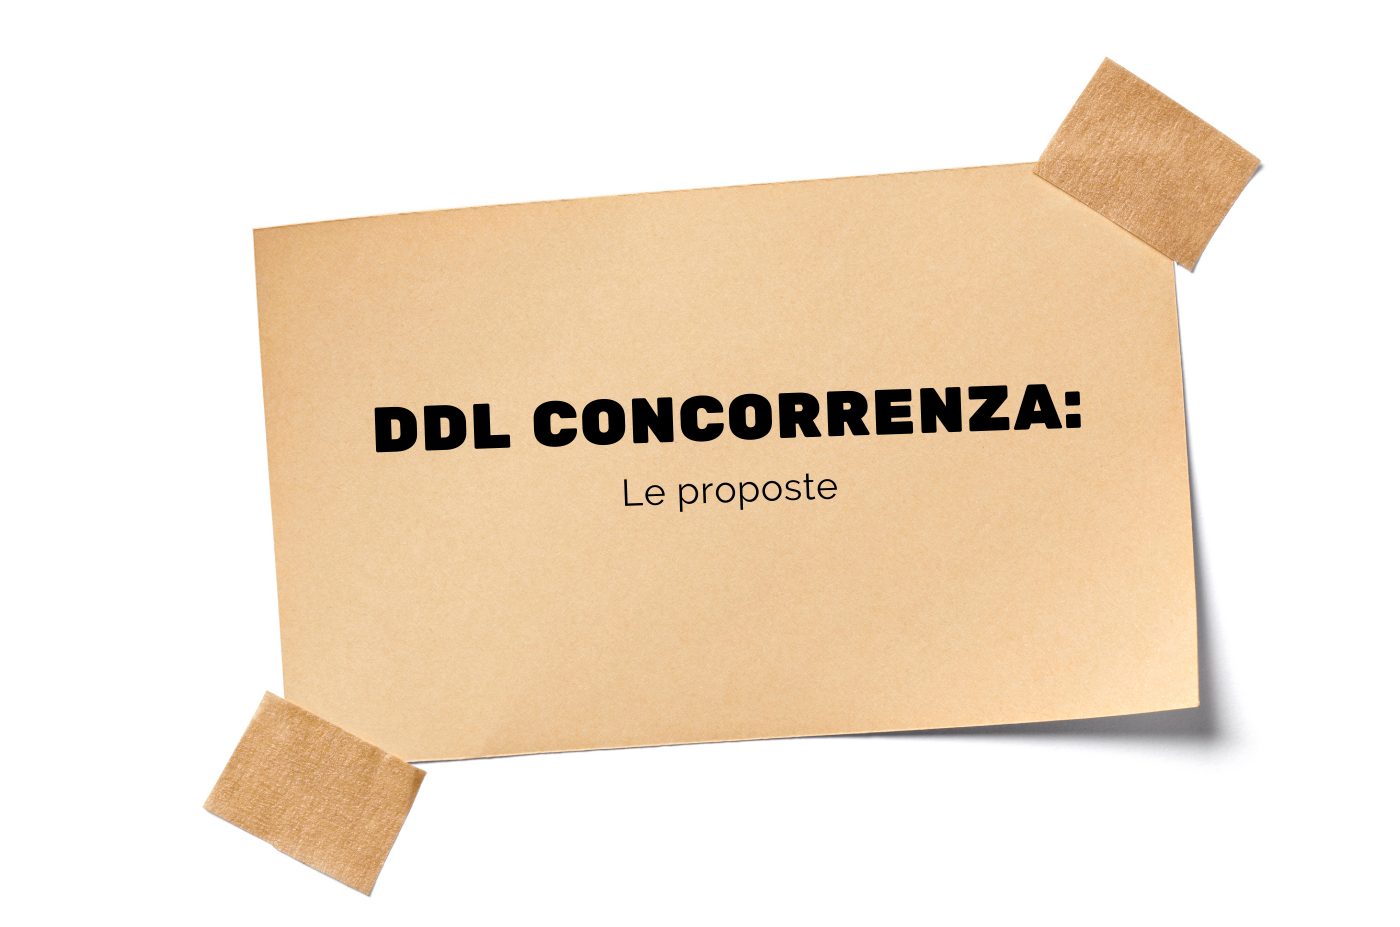 DDL Concorrenza